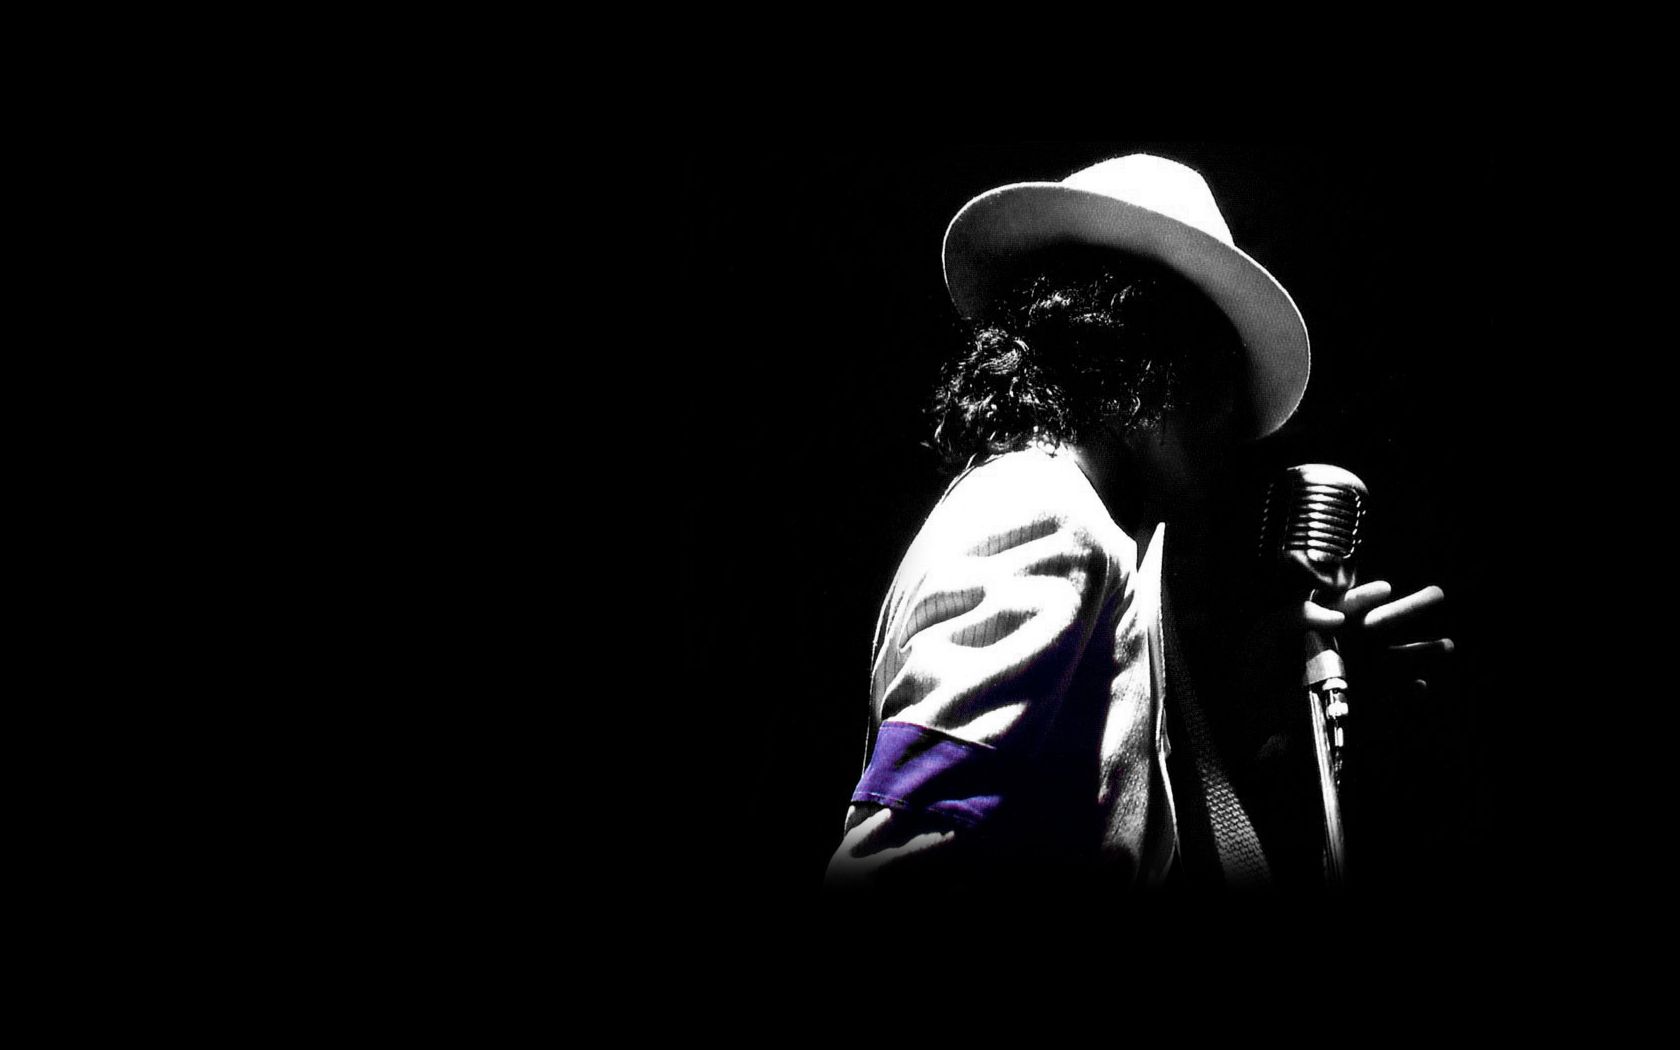 Michael Jackson Wallpaper 1080p C9v5lqr 4usky